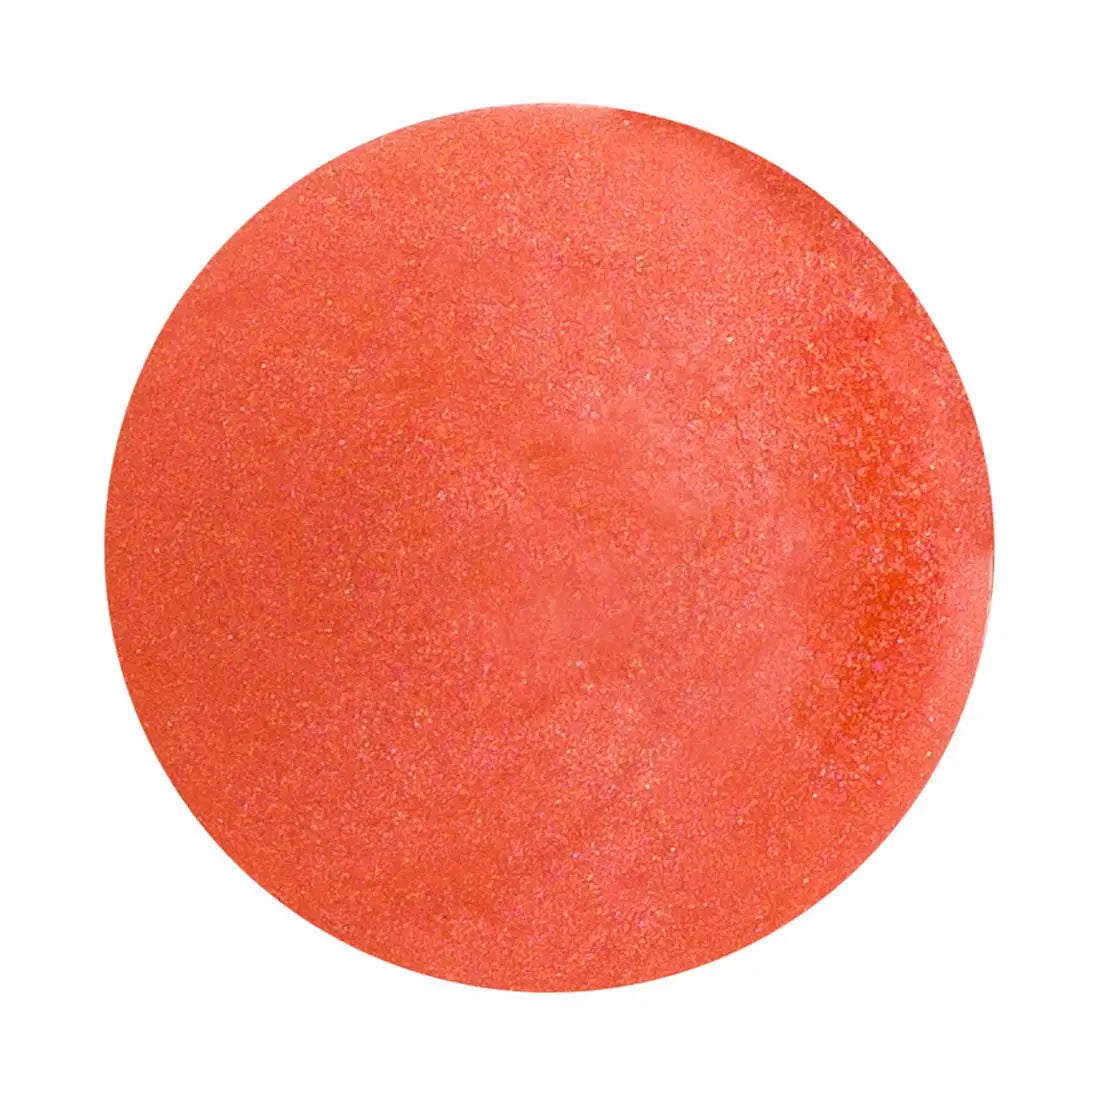 Henne Organics Luxury Lip Tint ’Coral’ 5g - Free Shipping 